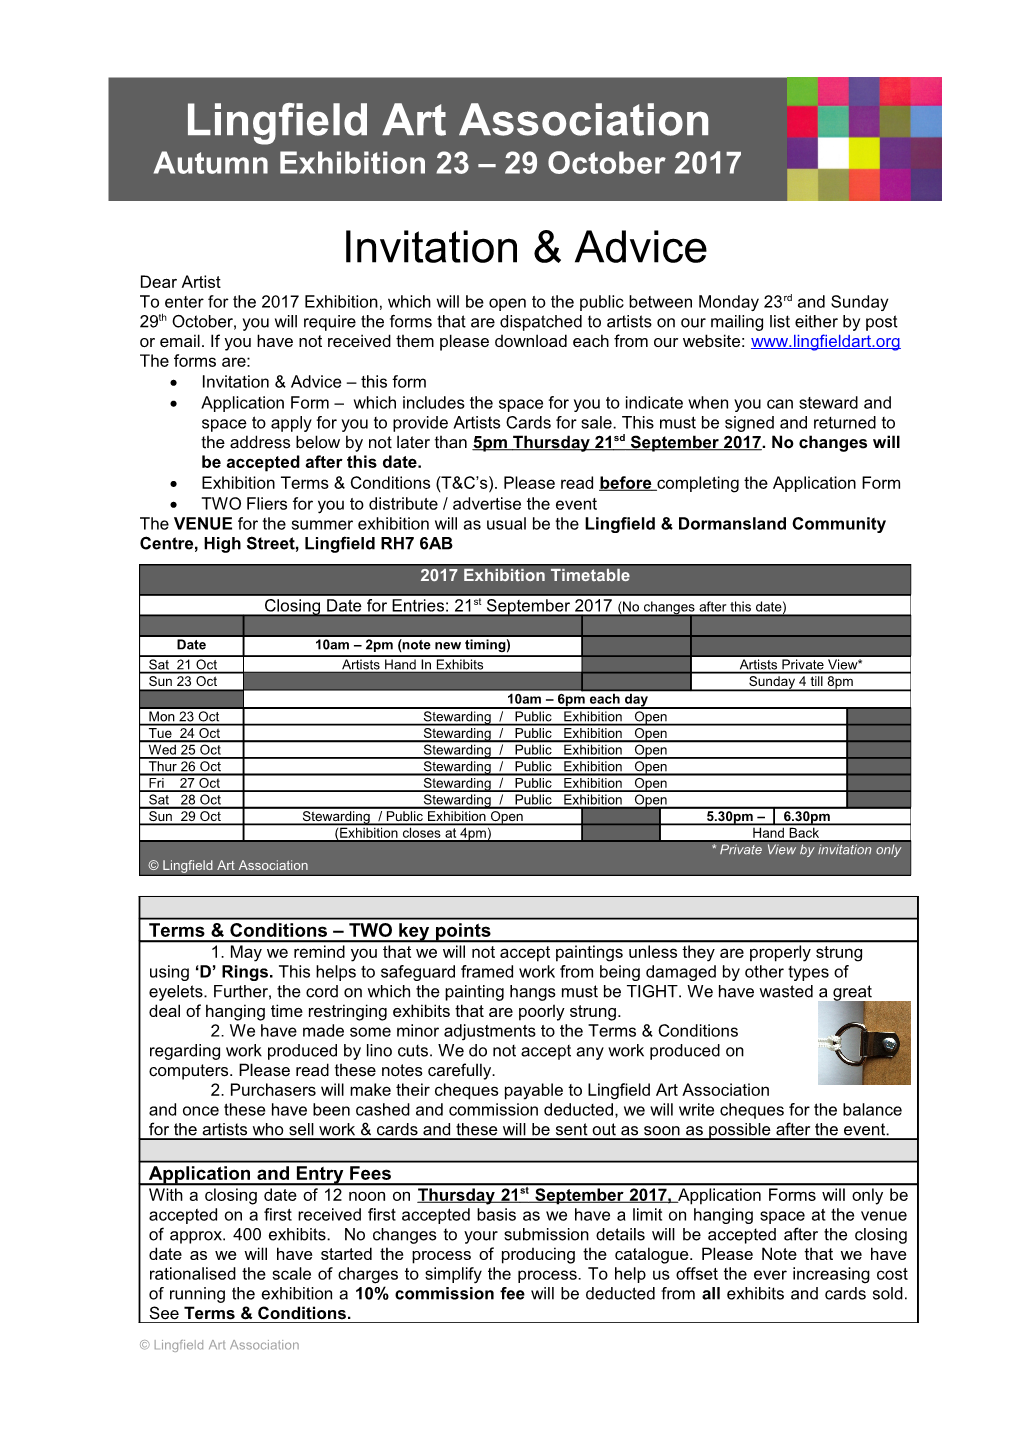 Invitation & Advice This Form